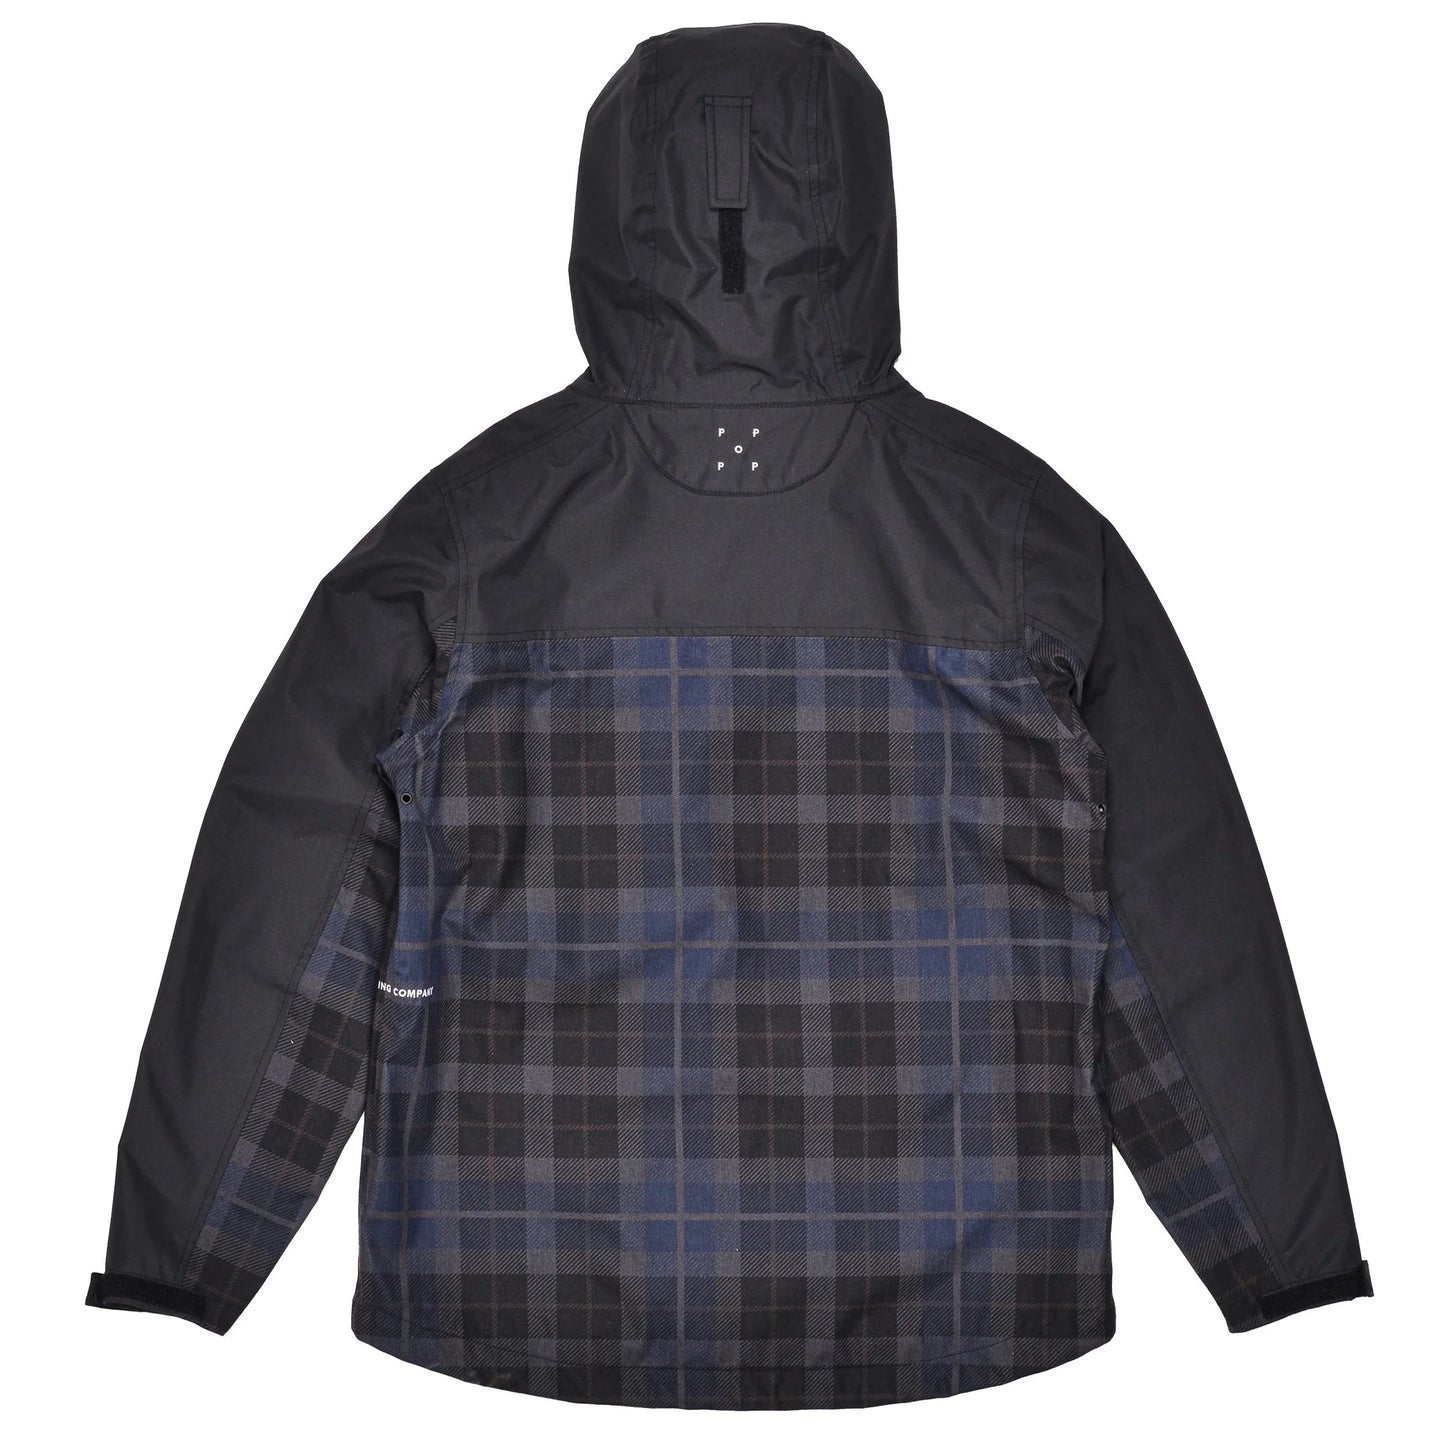 Pop Trading Company - Big Pocket Hooded Jacket - Black/Navy Check